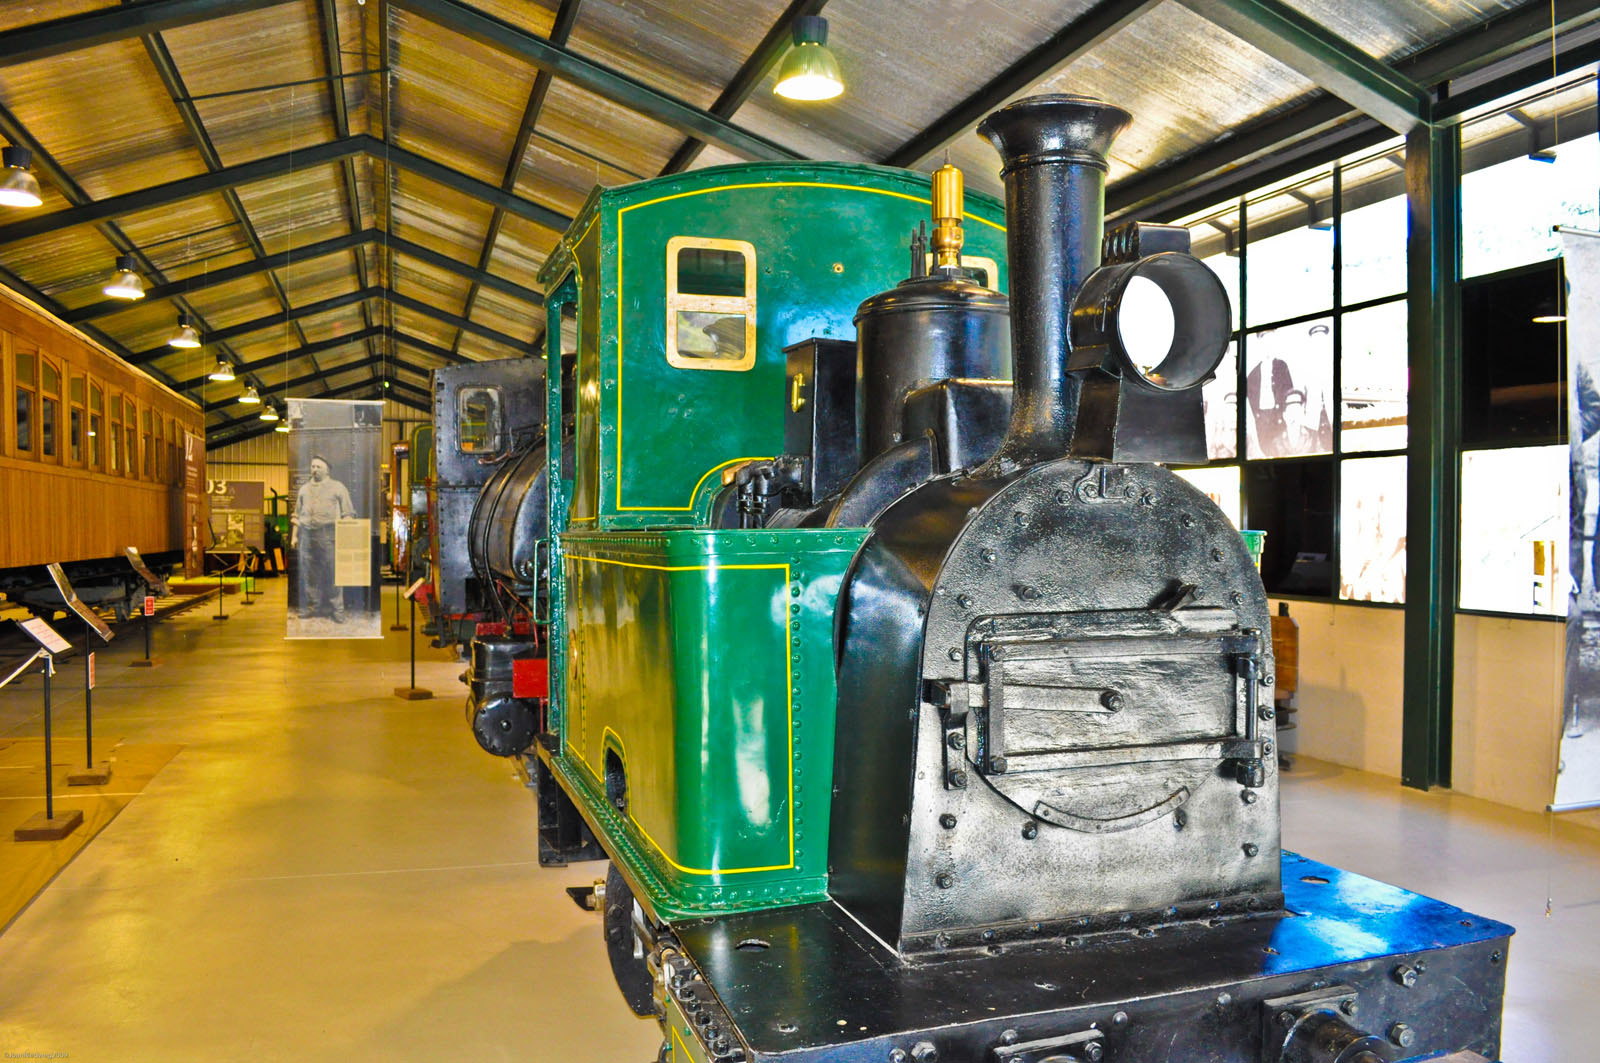 Imatge d'una locomotora antiga